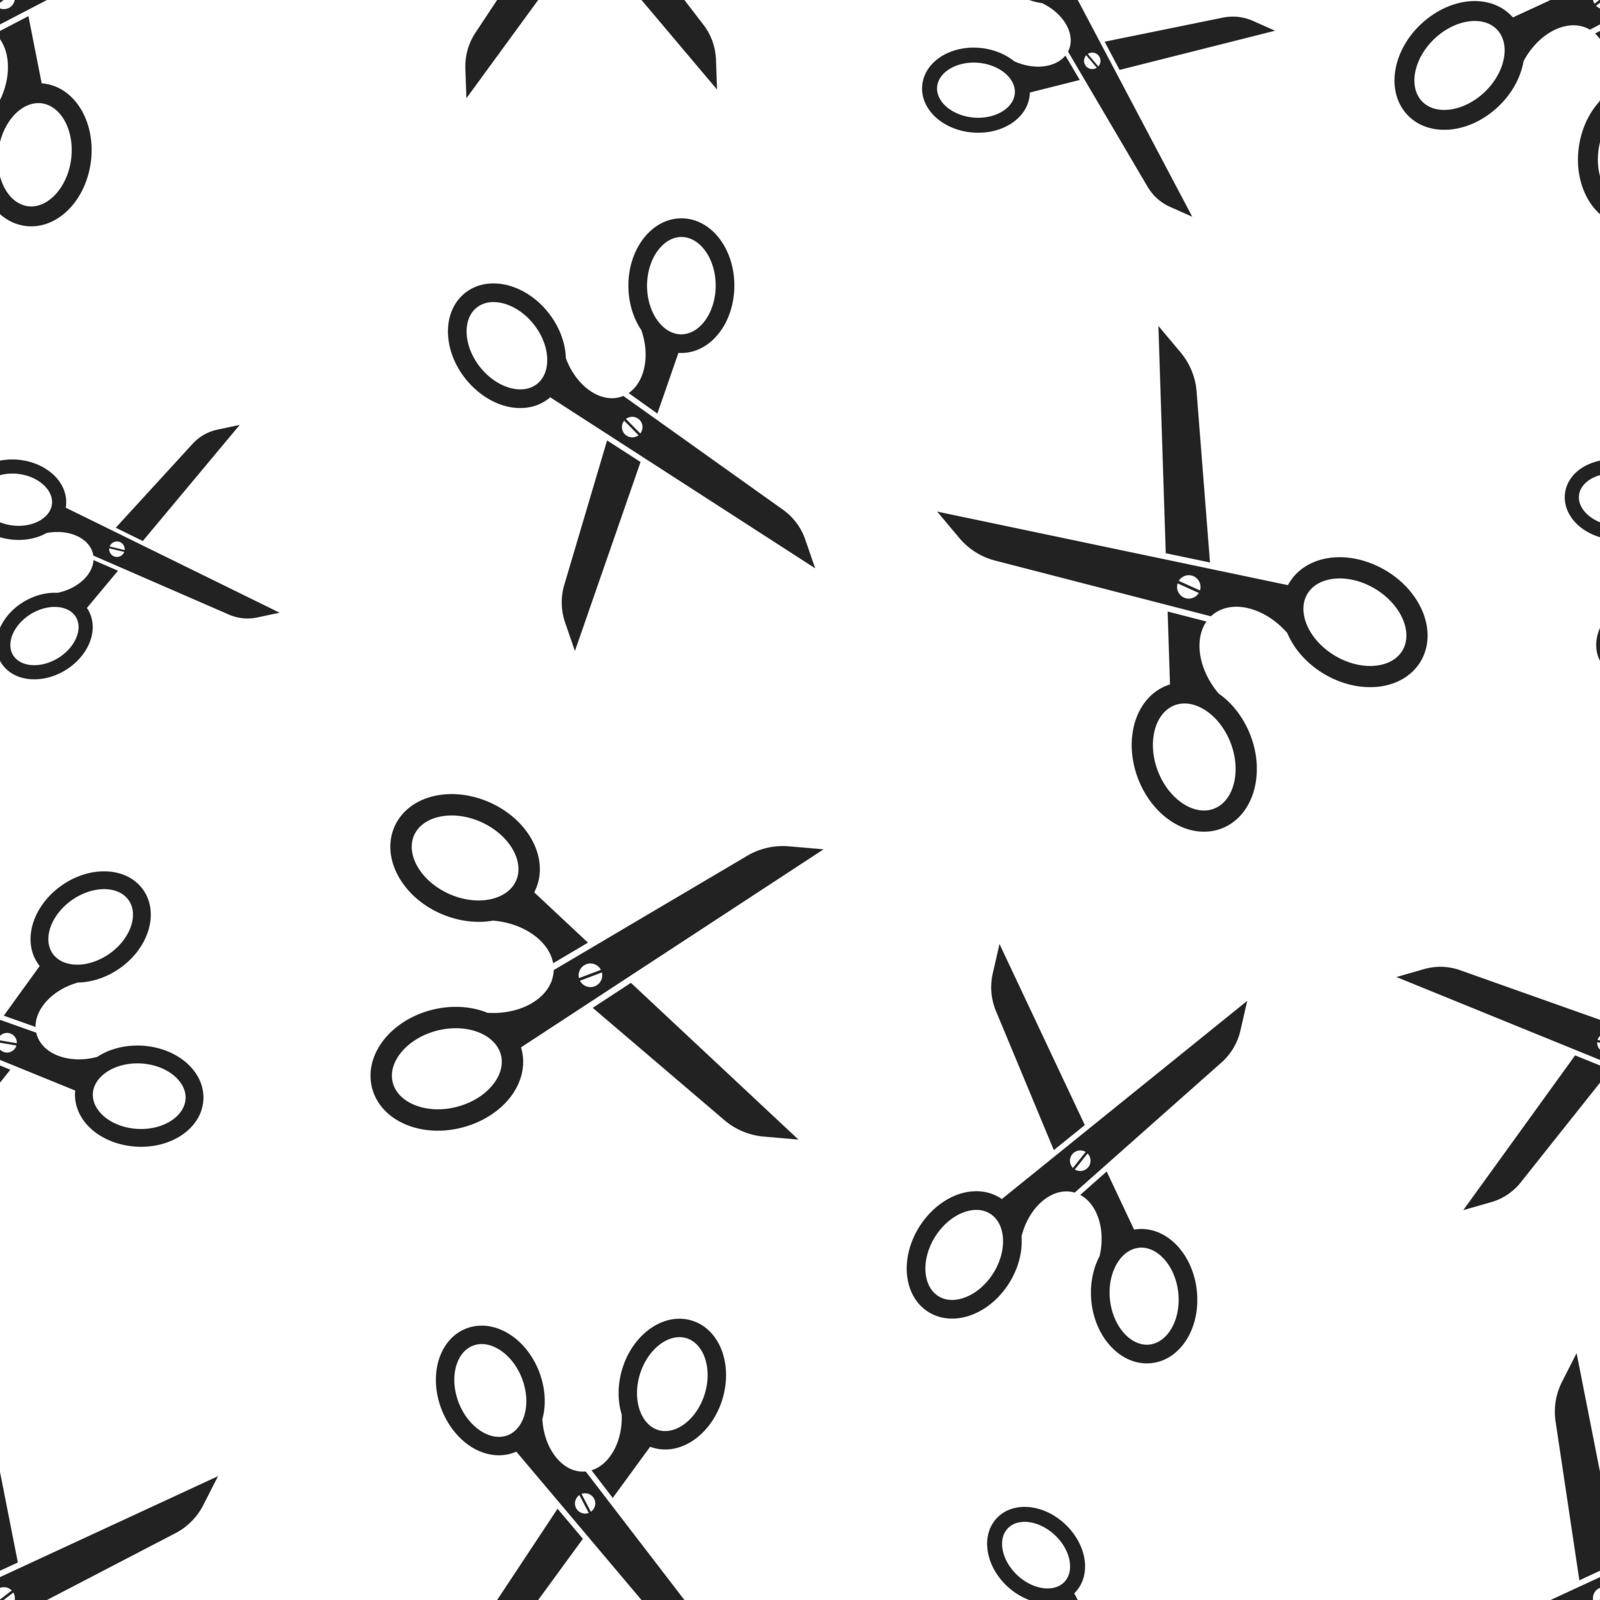 Scissors seamless pattern background. Business flat vector illustration. Scissor sign symbol pattern.